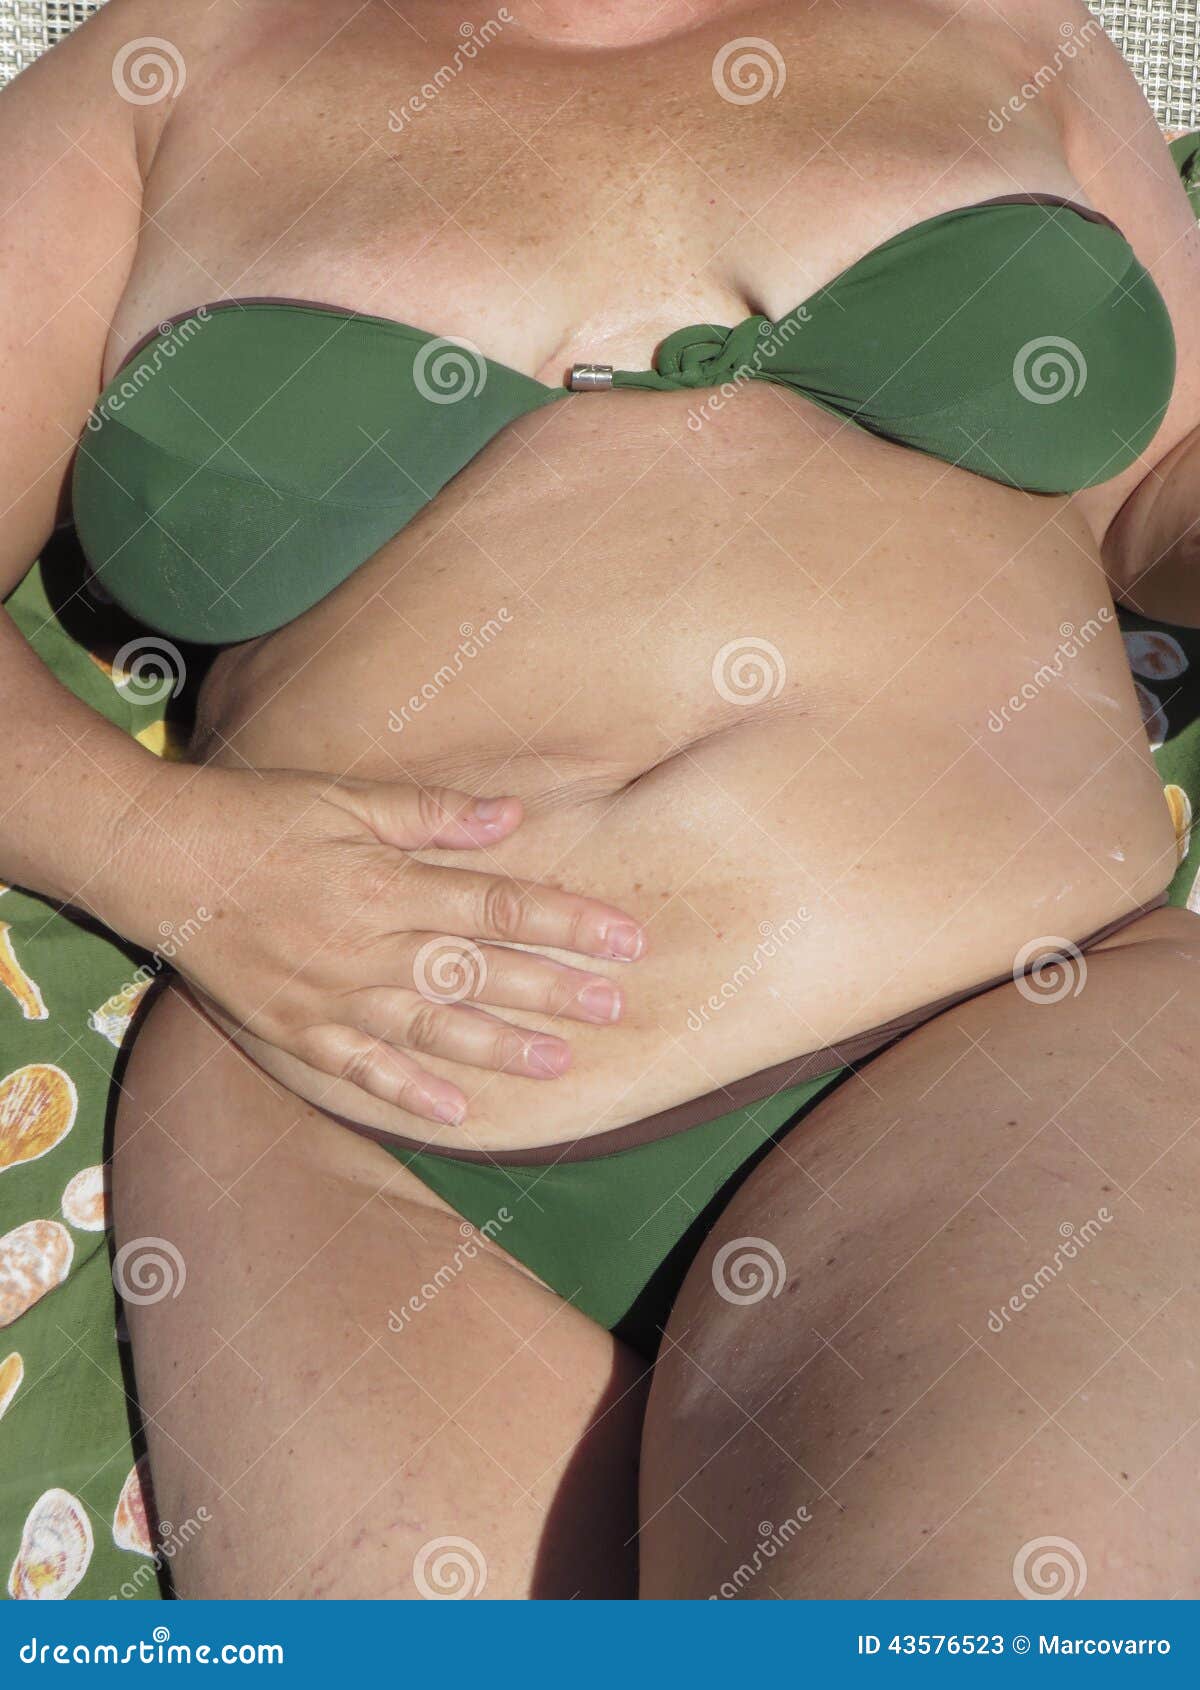 178 Chubby Lady Bikini Stock Photos image